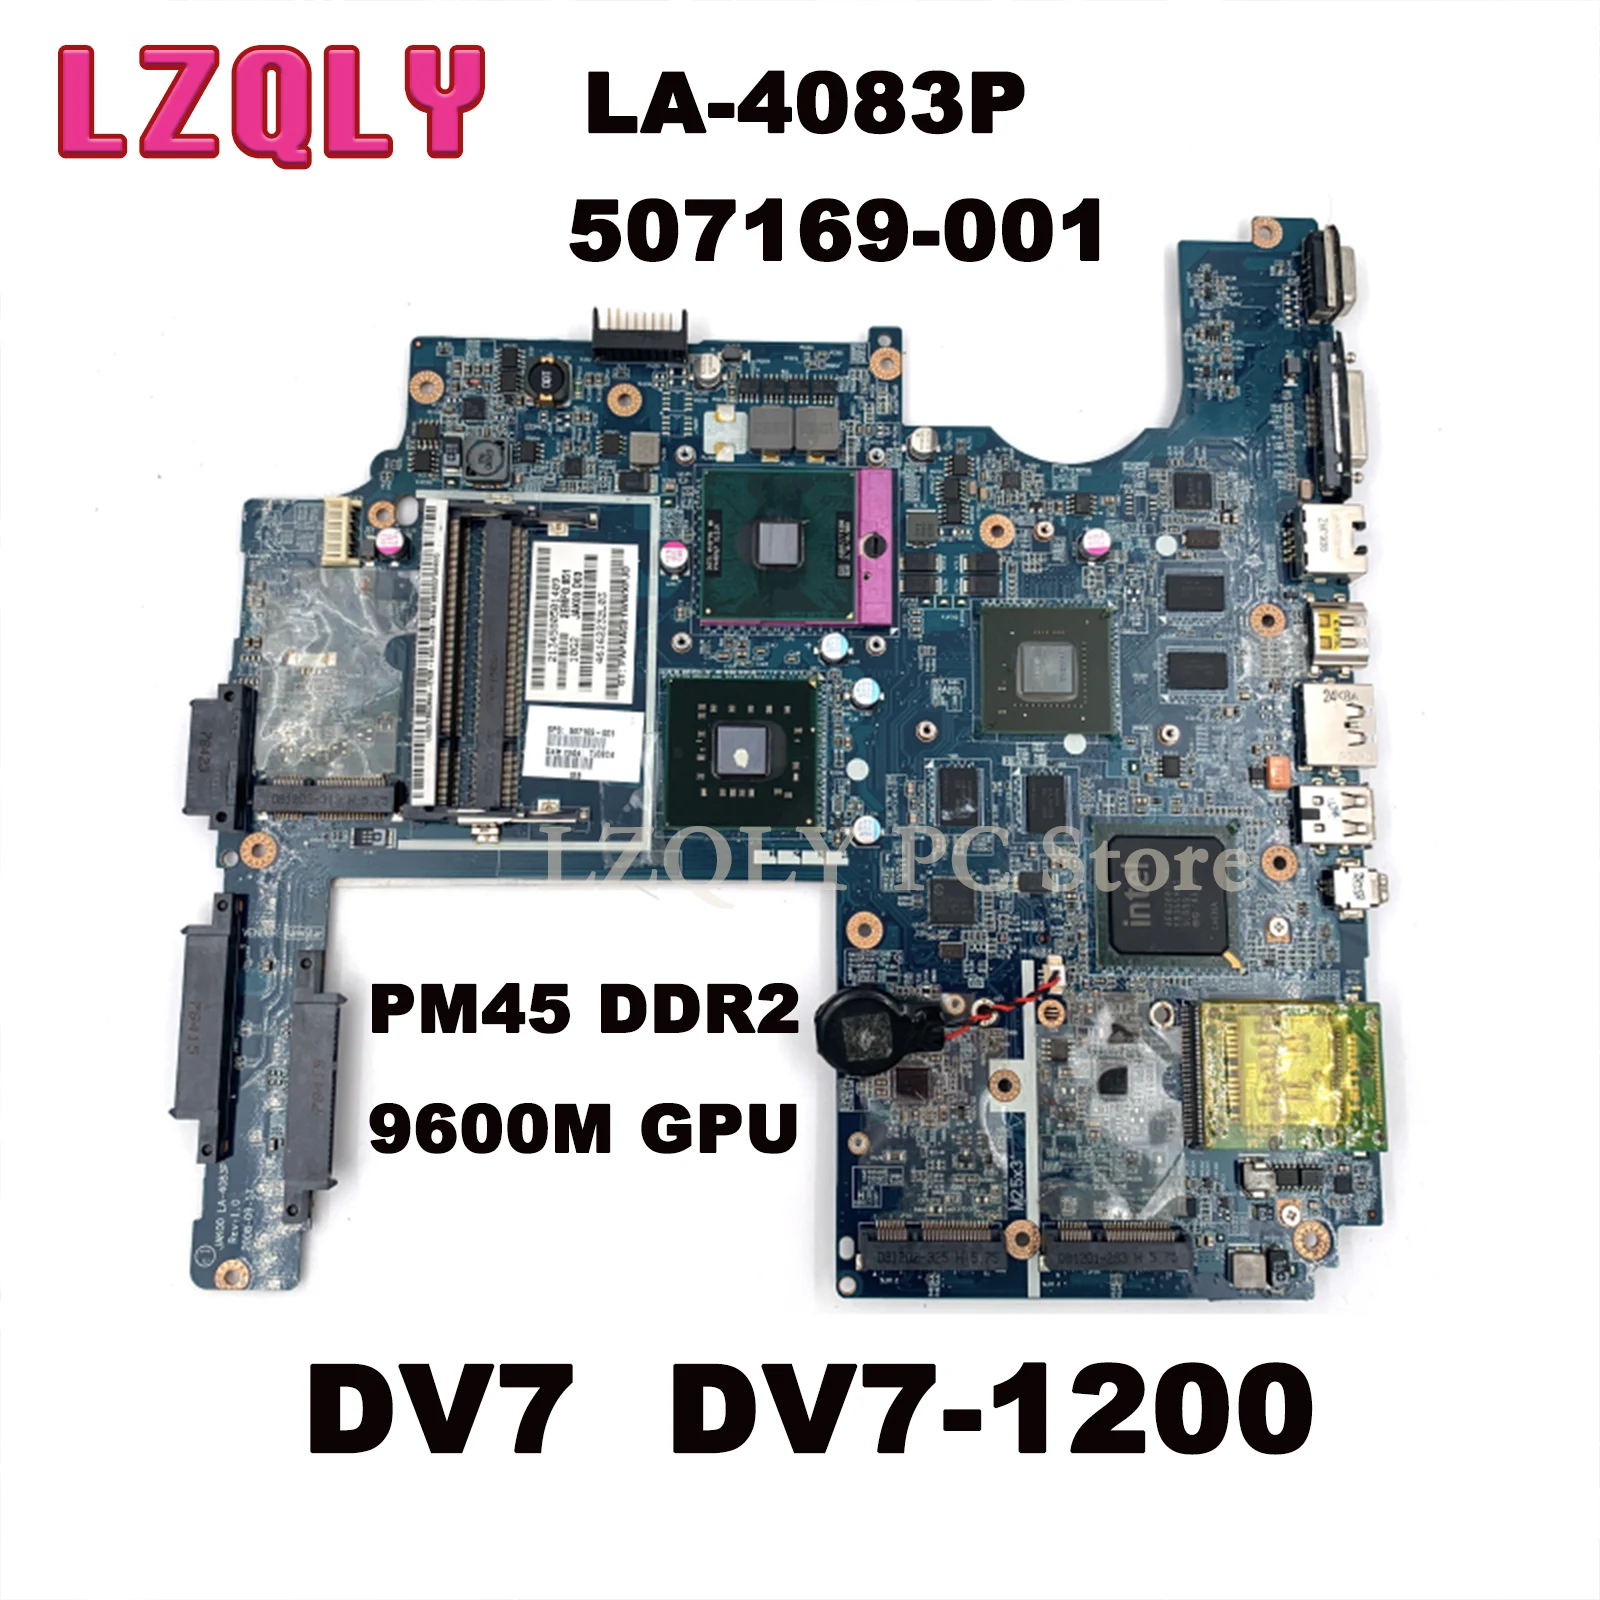 

LZQLY JAK00 LA-4083P 507169-001 Main board For HP Pavilion DV7 DV7-1200 Laptop Motherboard PM45 DDR2 9600M GPU Free CPU